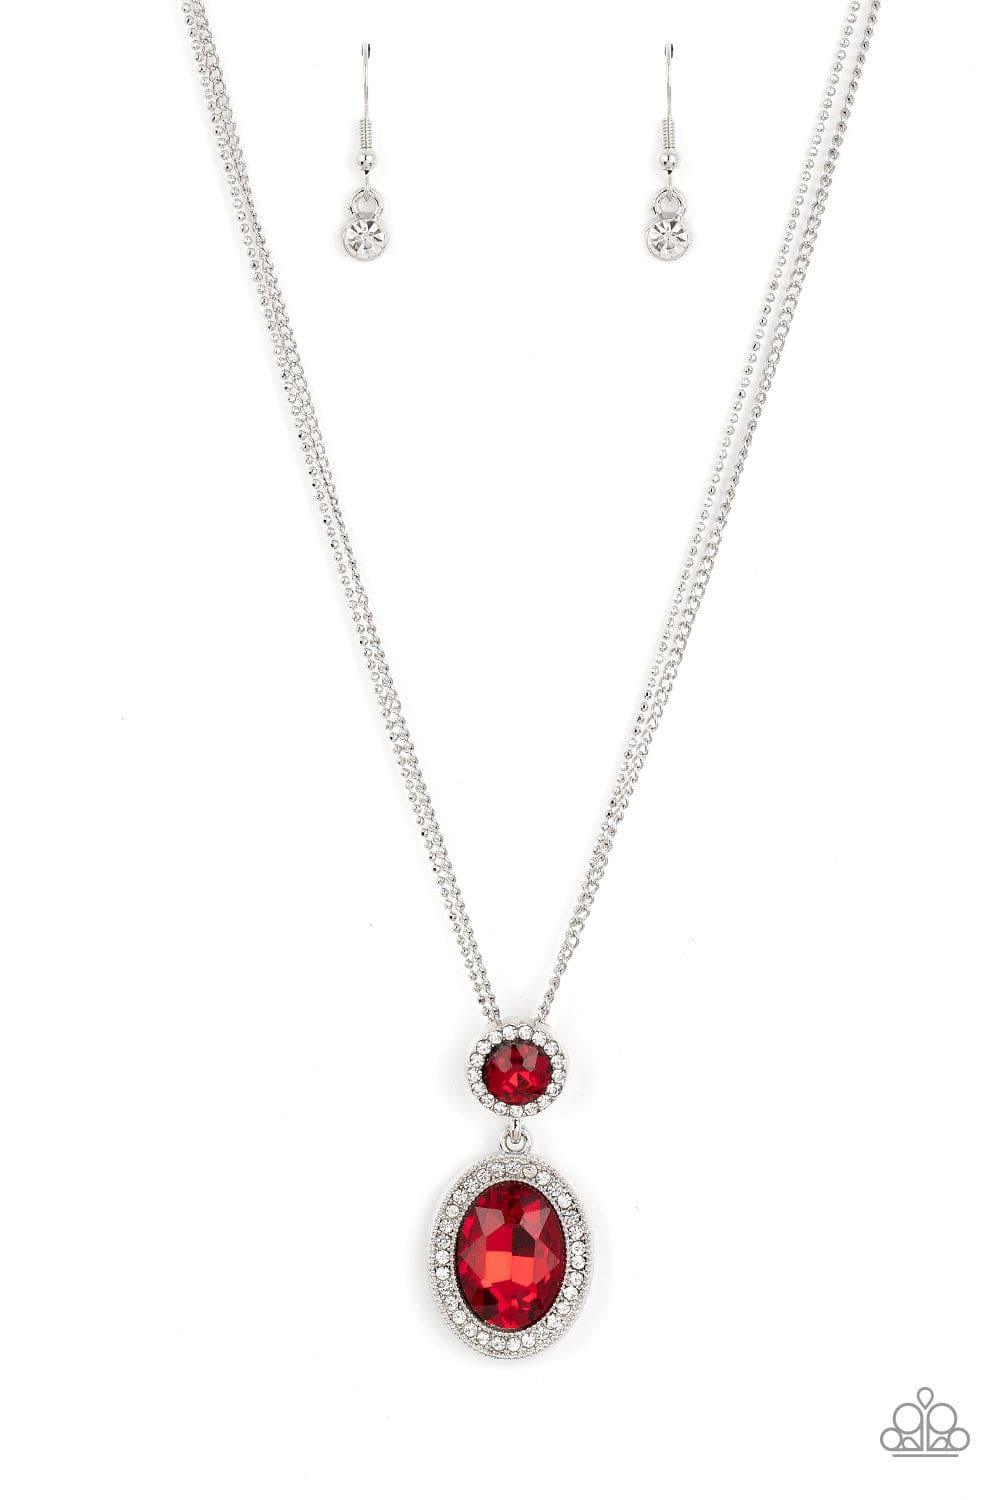 Paparazzi Accessories - Castle Diamonds - Red Necklace - Bling by JessieK